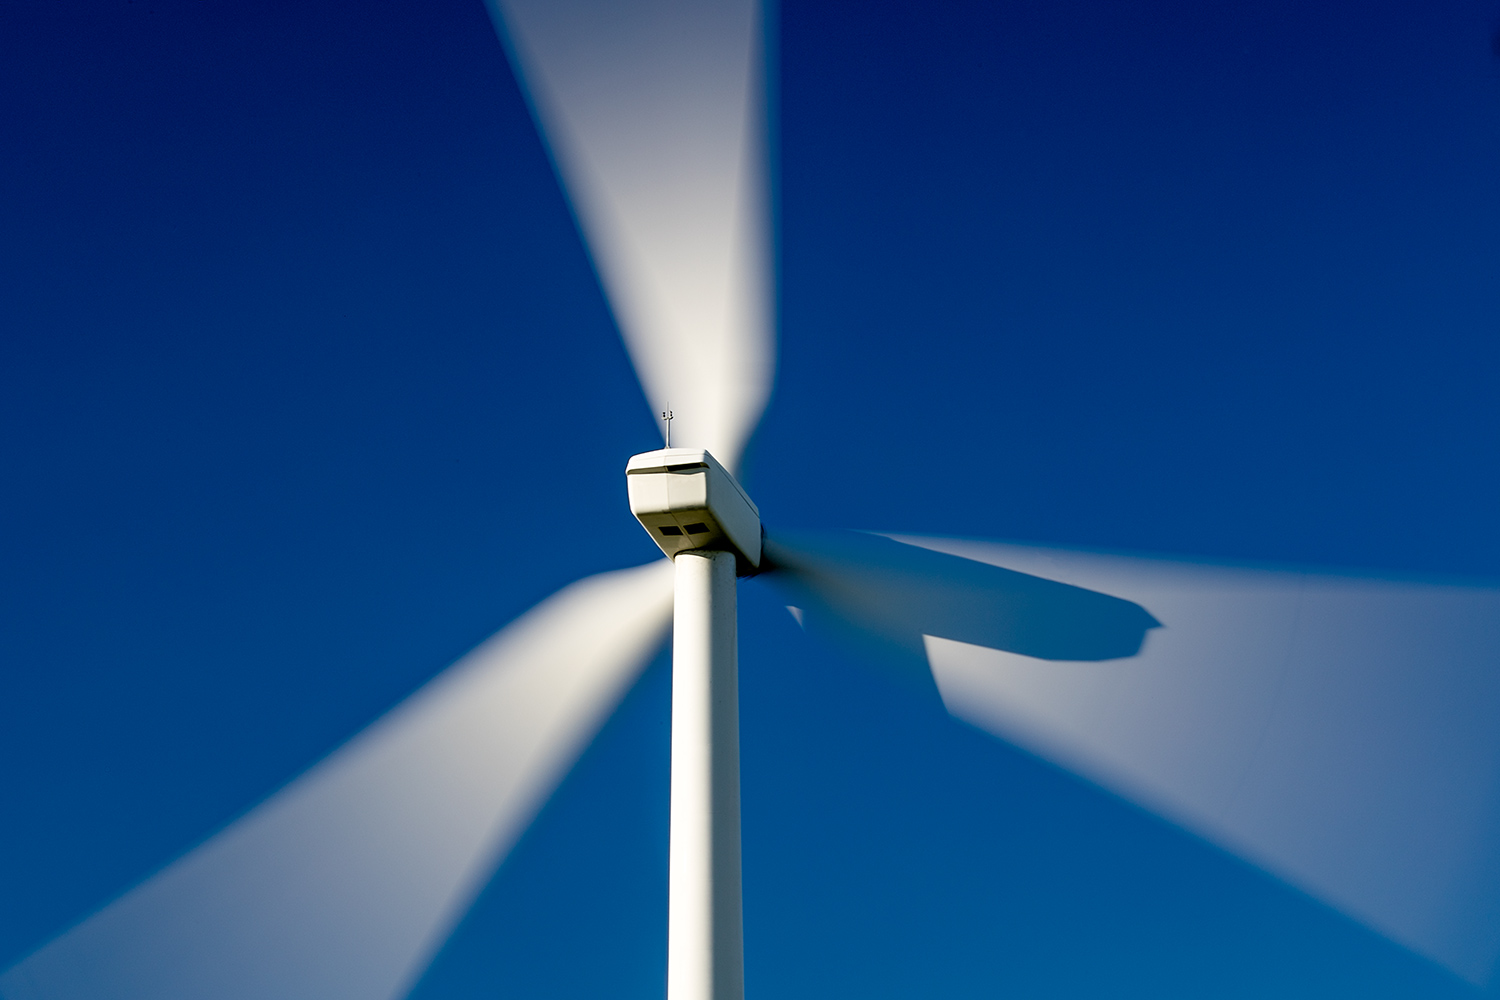 20+ photos of wind energy